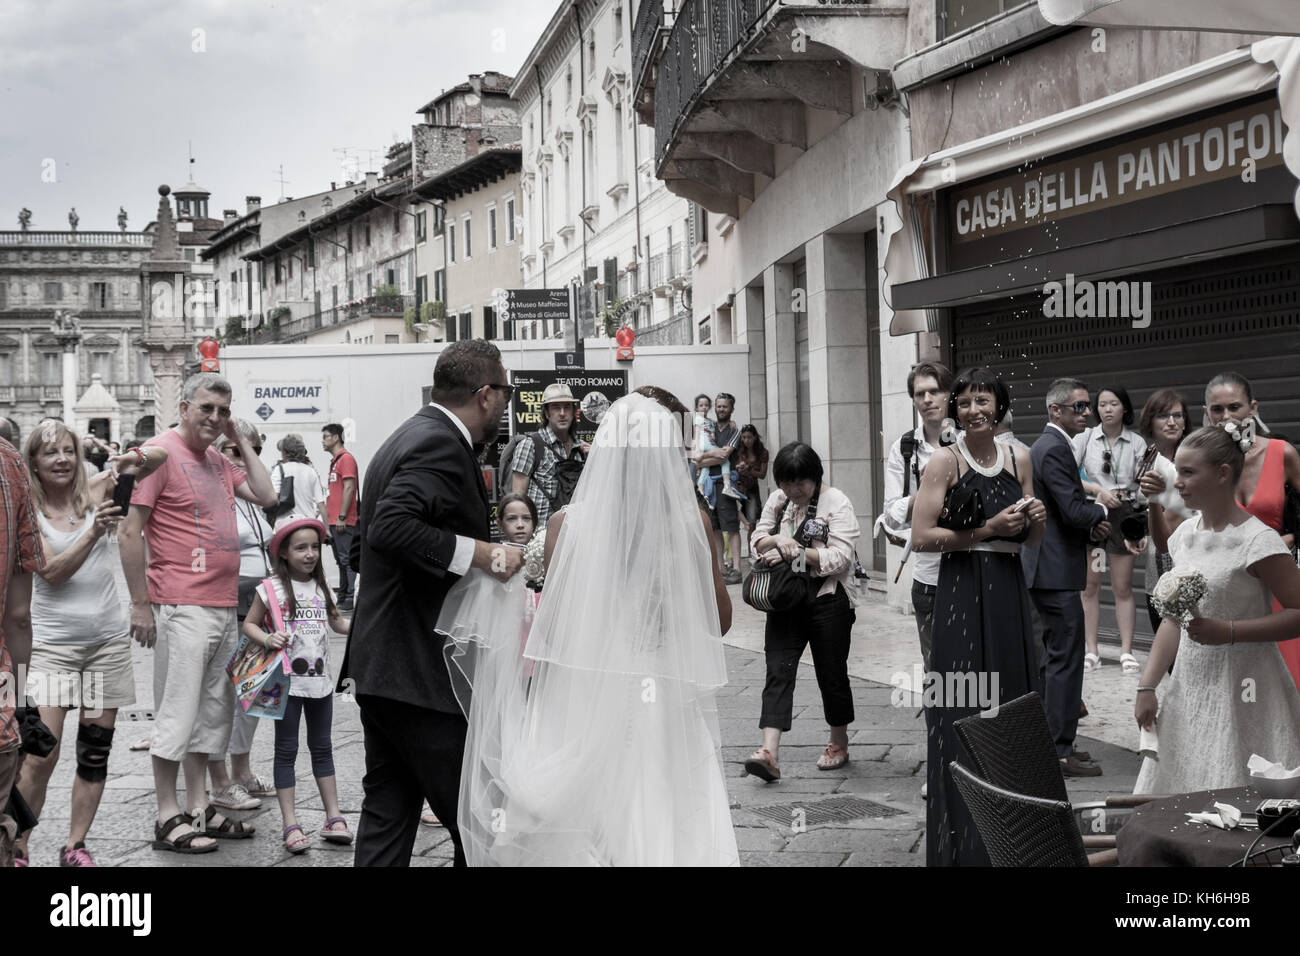 Bride And groom celebrated them wedding in Piazza della Erbe, Verona, Italy. Stock Photo